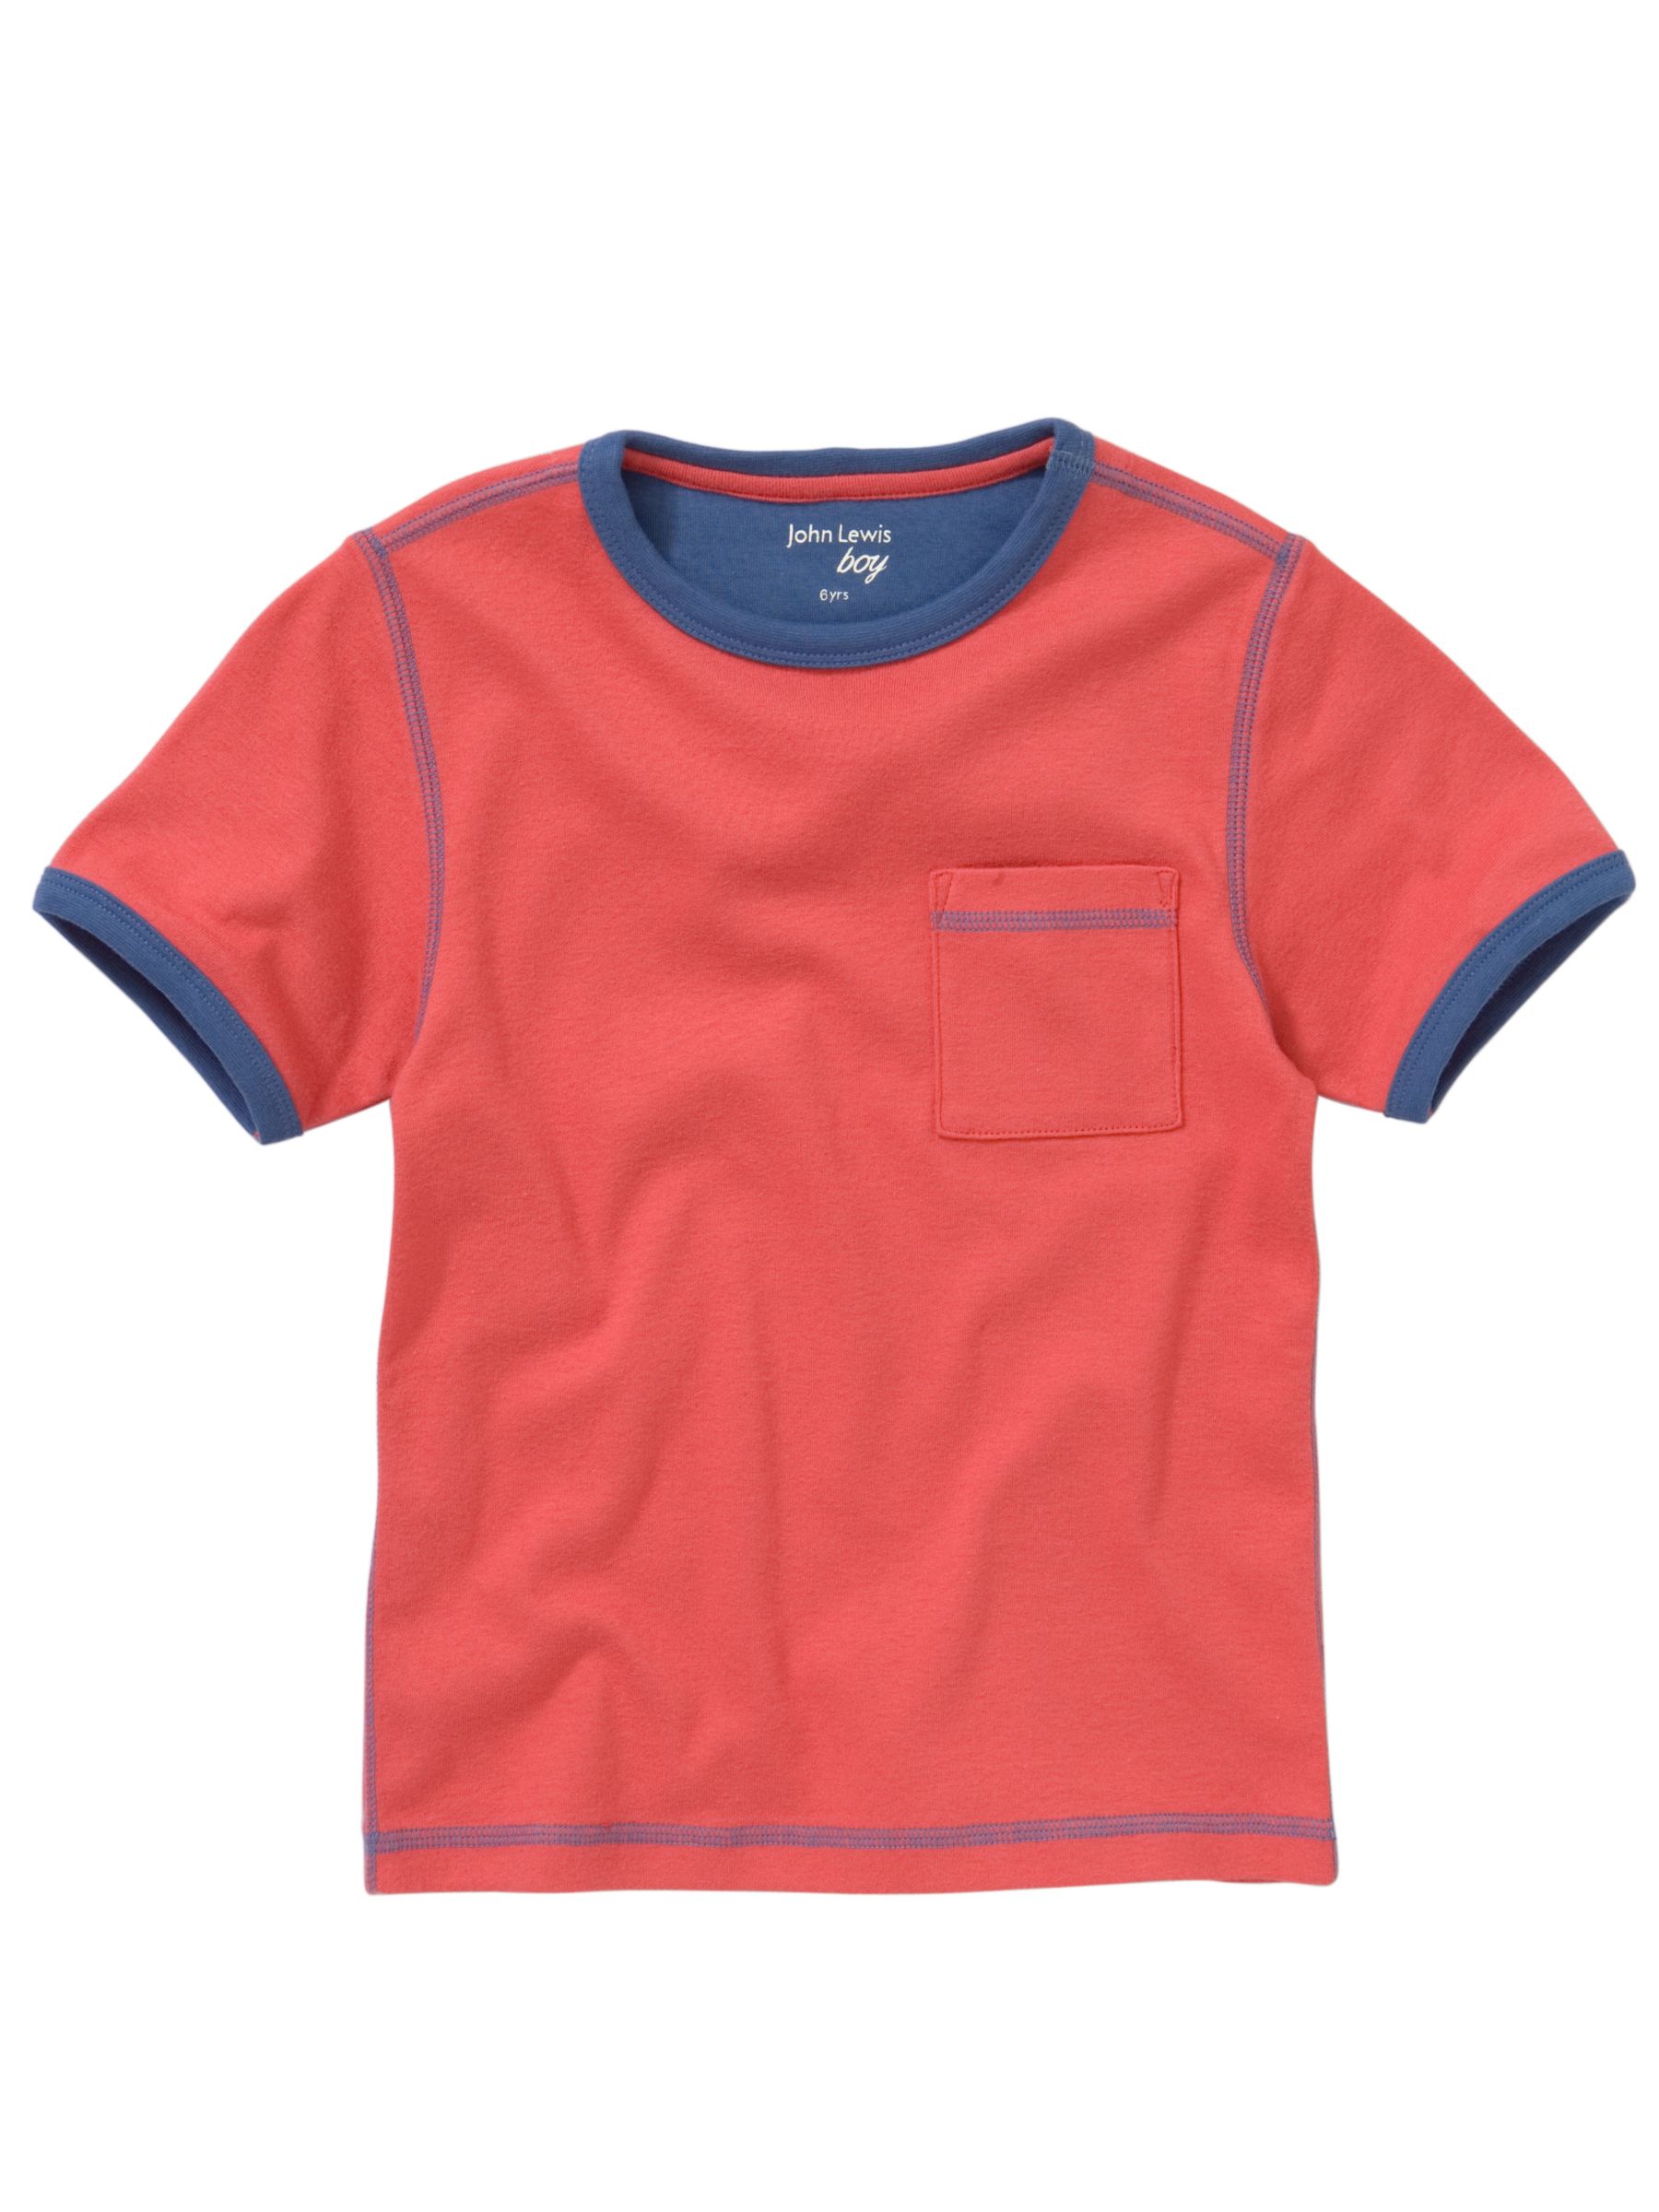 John Lewis Boy Short Sleeve T-Shirt, Red, 4 years